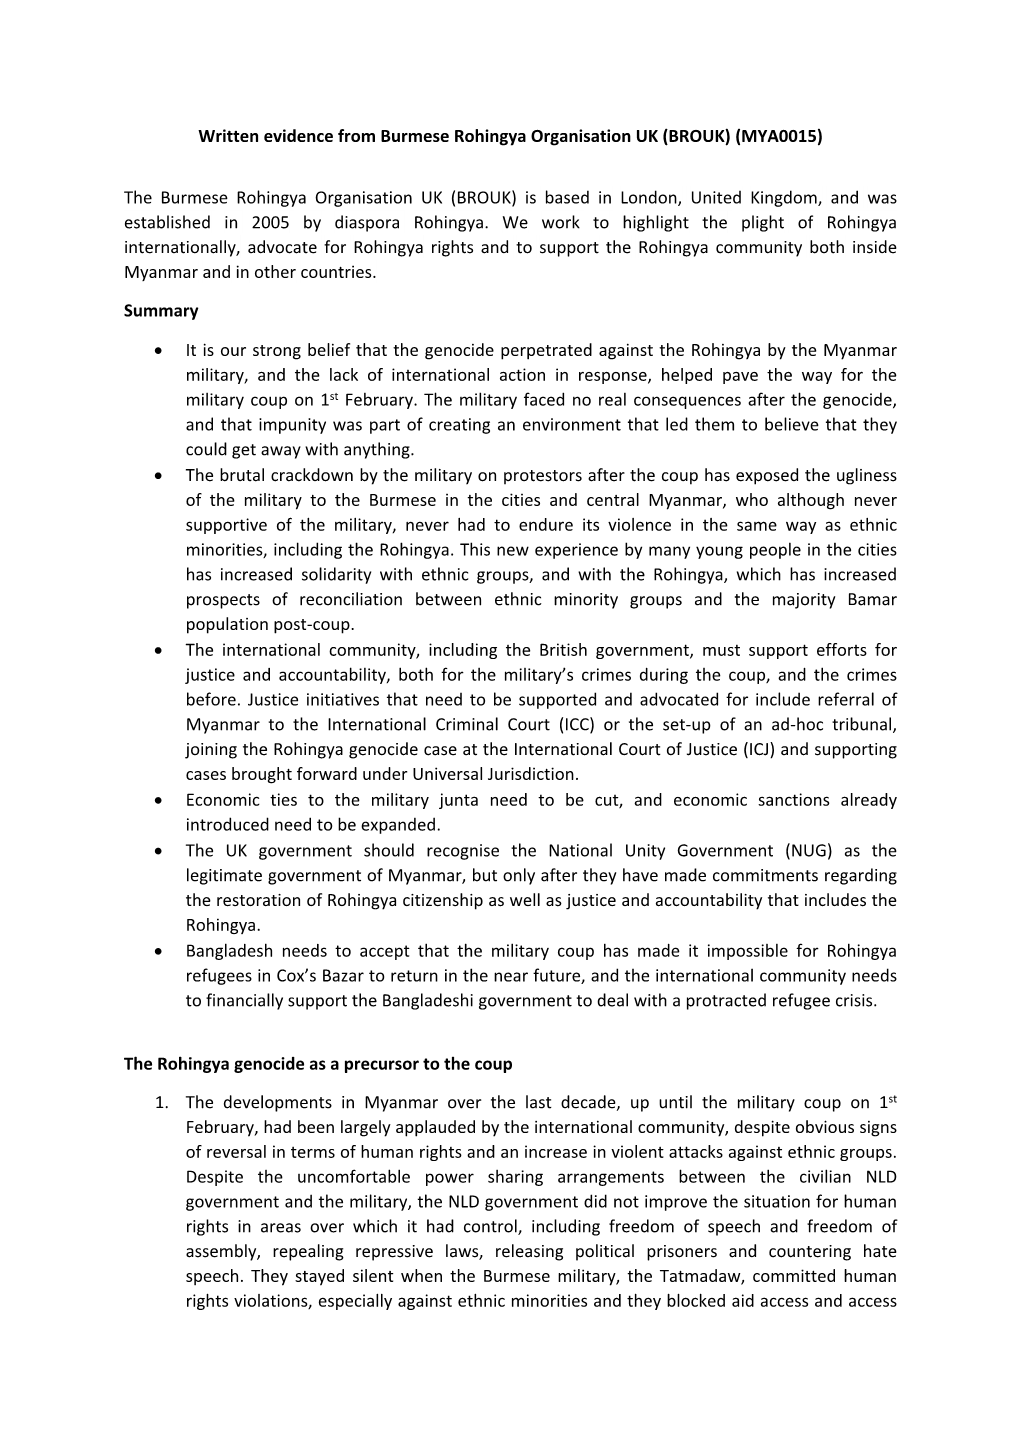 Written Evidence from Burmese Rohingya Organisation UK (BROUK) (MYA0015)